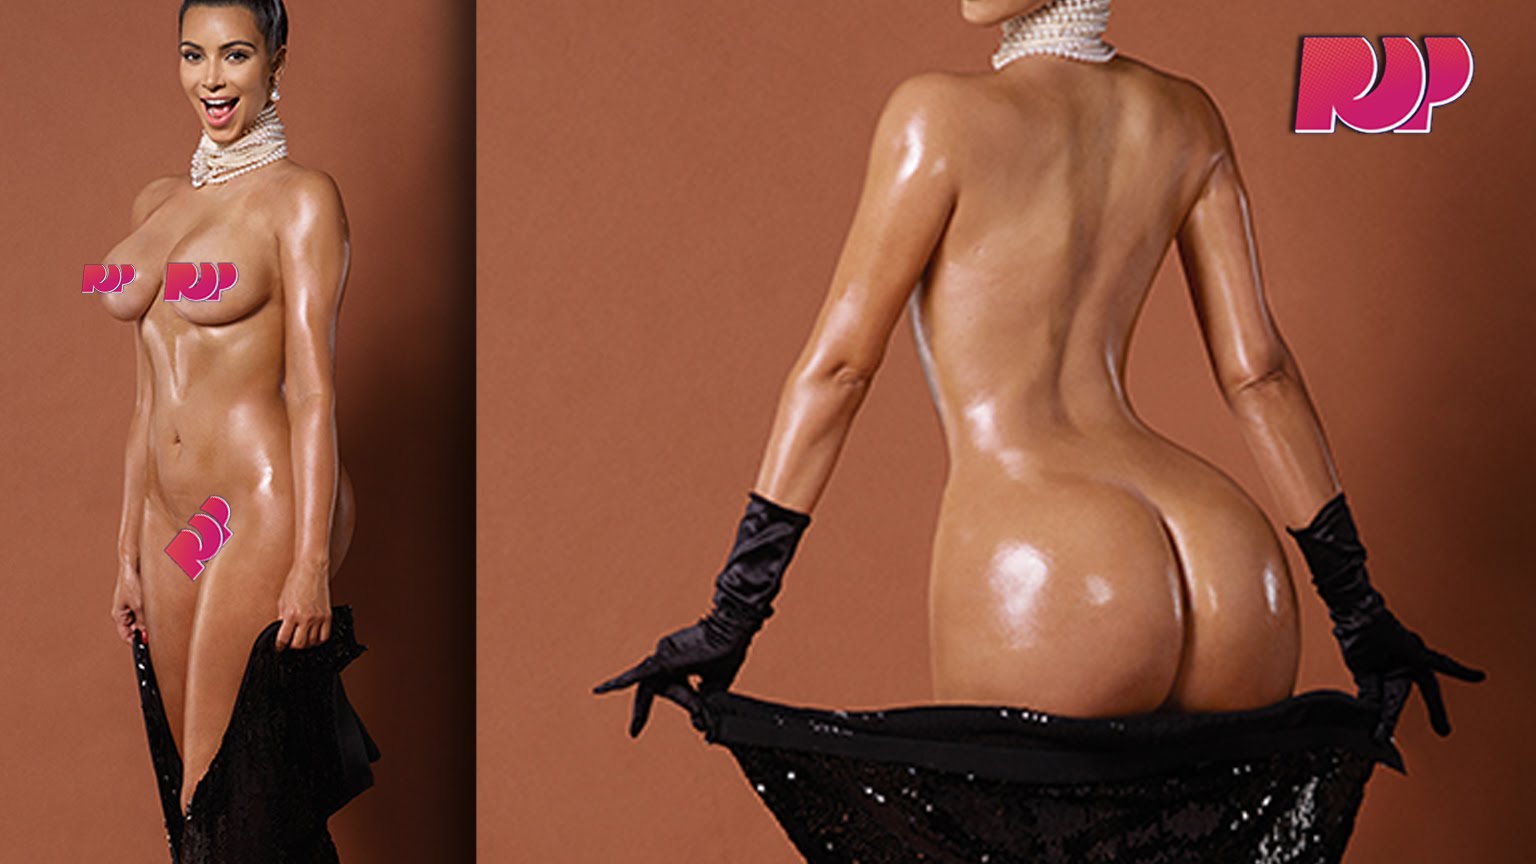 Kim kardashian naked gallery